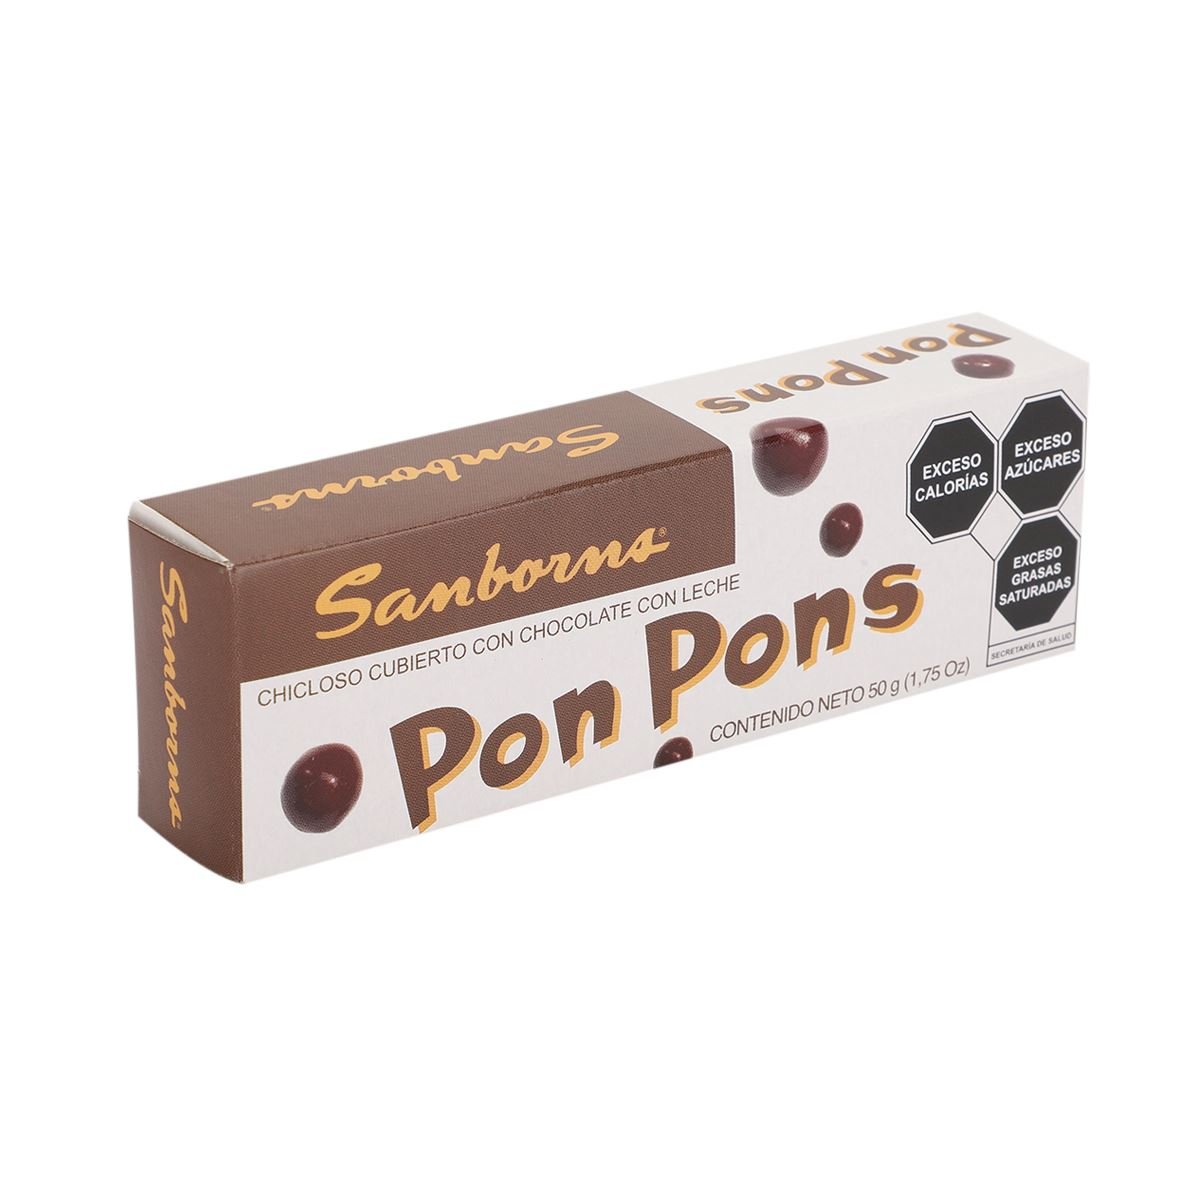 Cajilla Pon Pons Chocolate con leche 50 gramos Sanborns